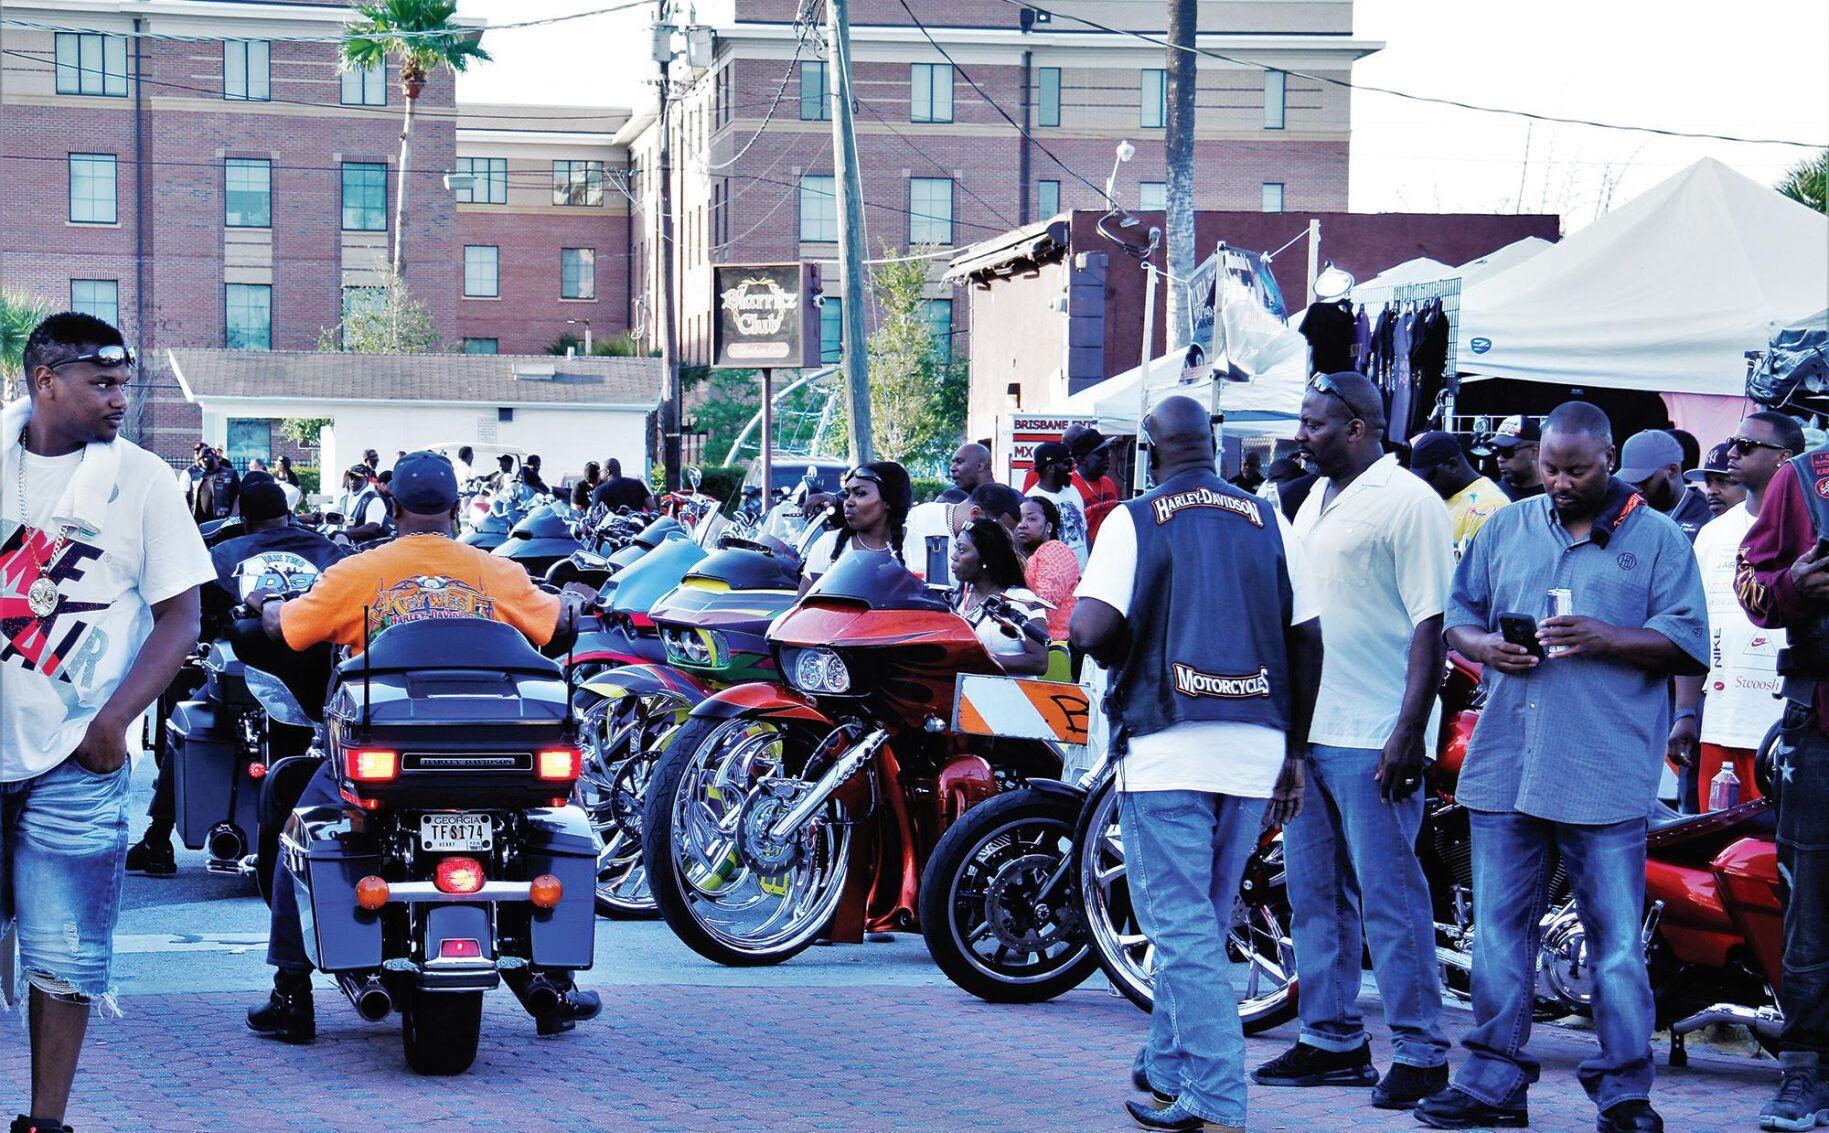 Bike Week in Black community comes to an early halt Daytonabeach